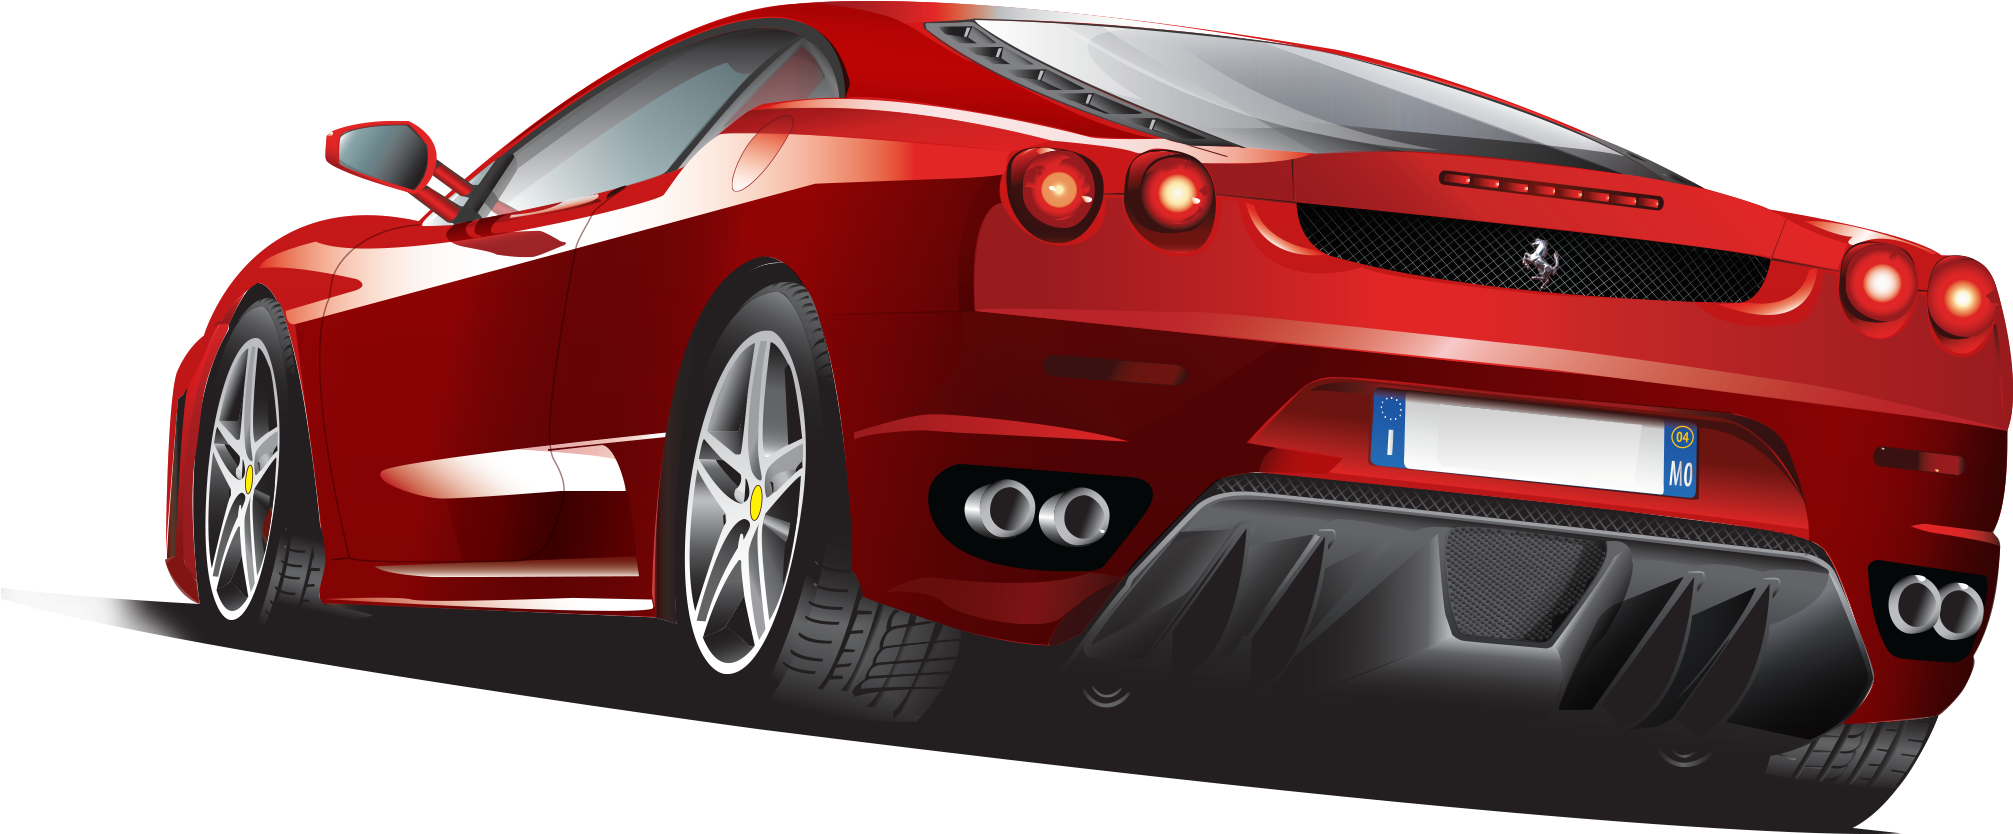 Red Ferrari Sports Car Illustration